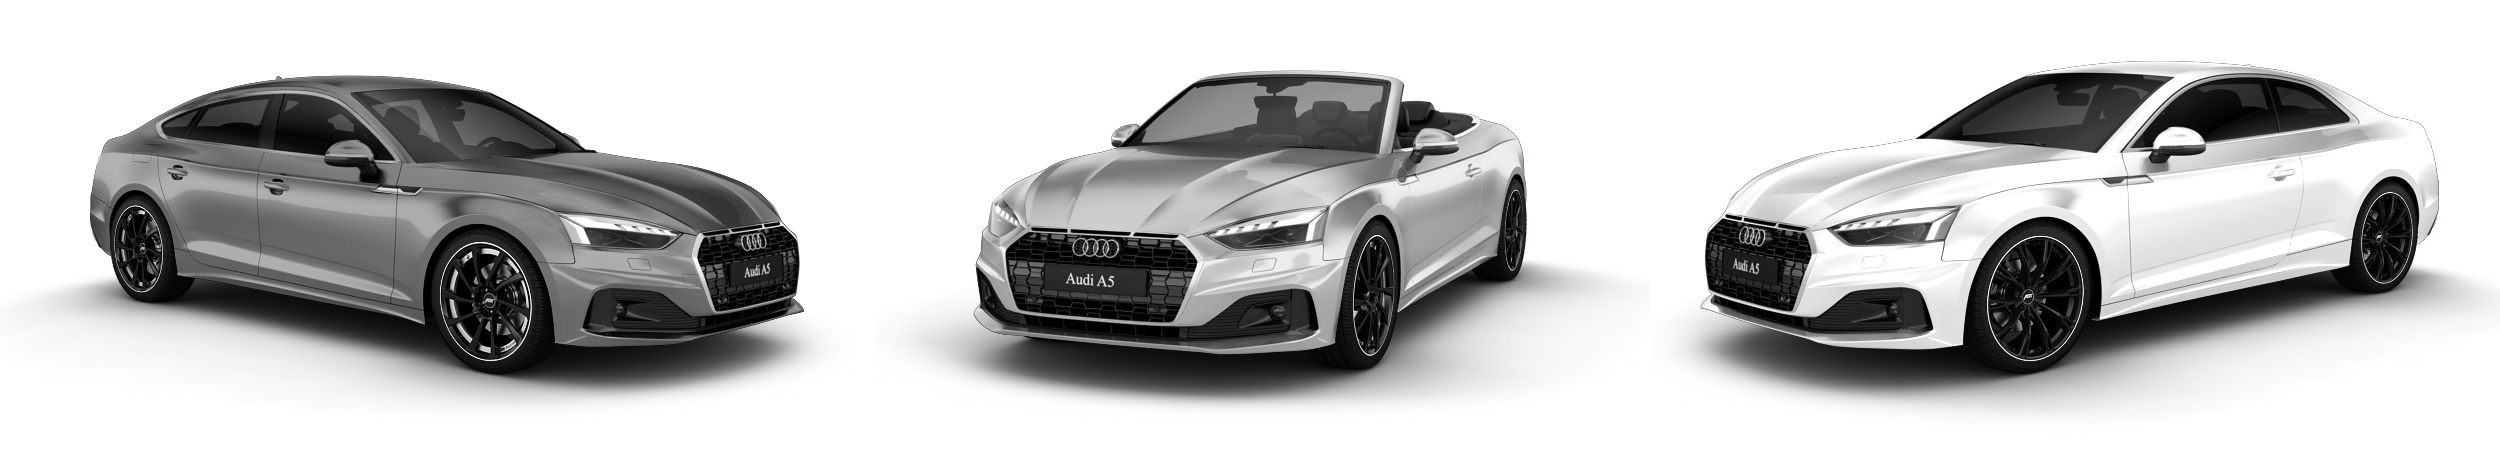 Audi A5 - Audi Tuning, VW Tuning, Chiptuning von ABT Sportsline.